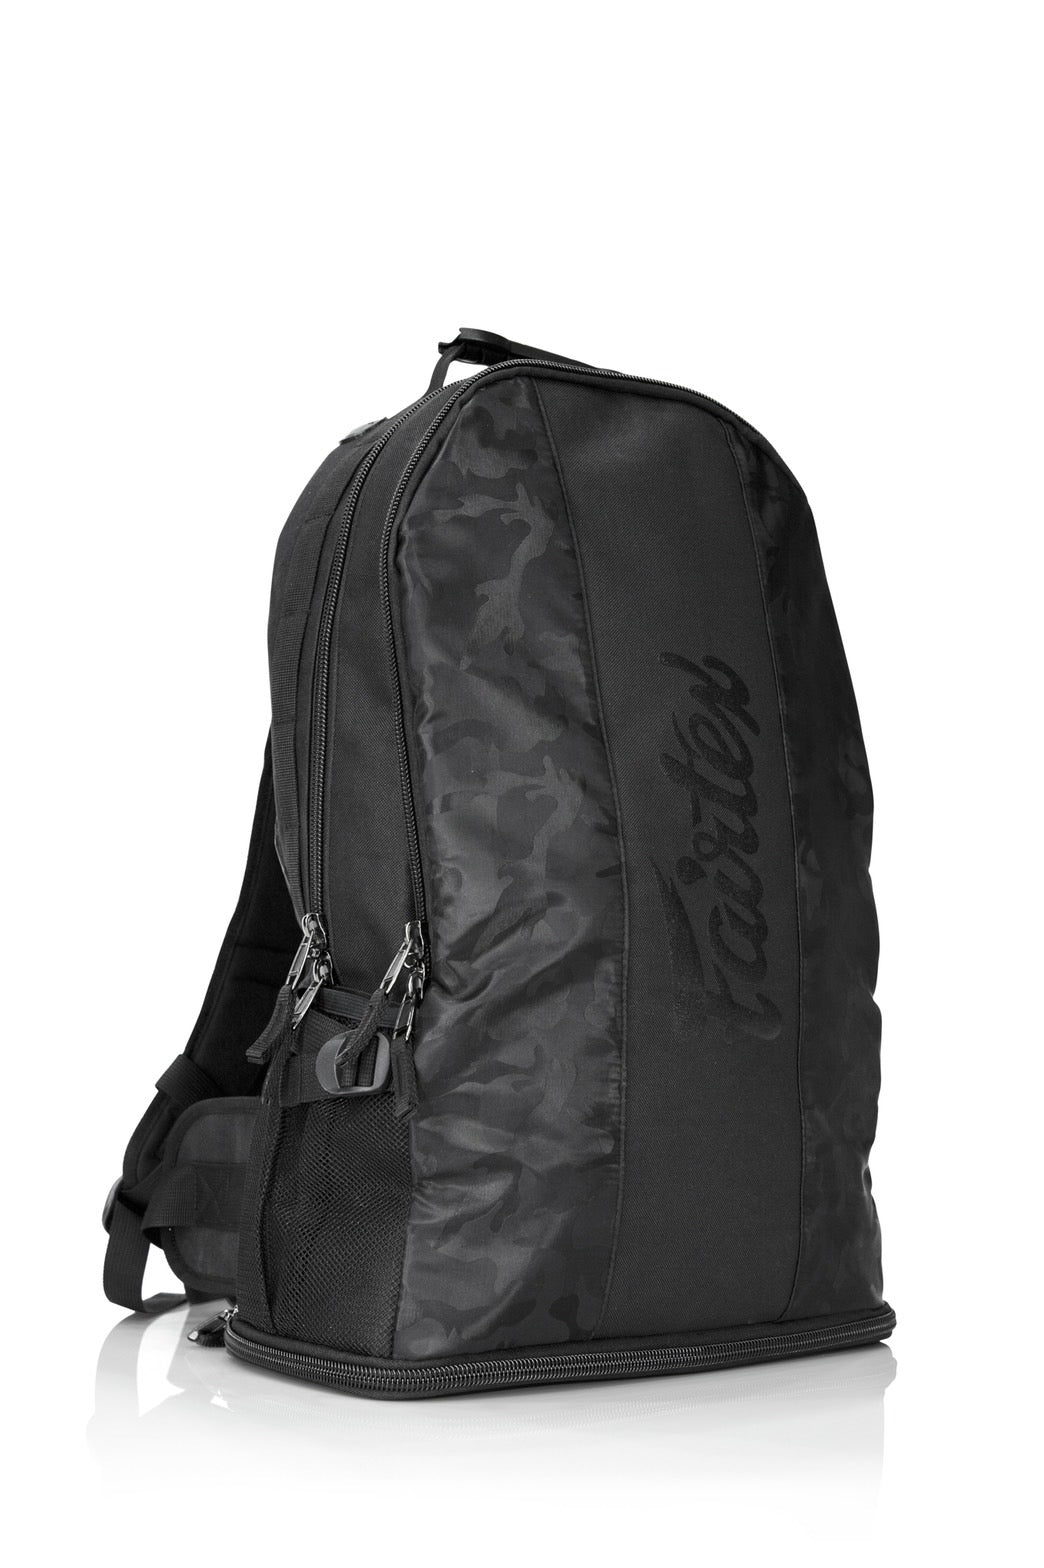 Fairtex Gym Bag / Backpack 4 Black